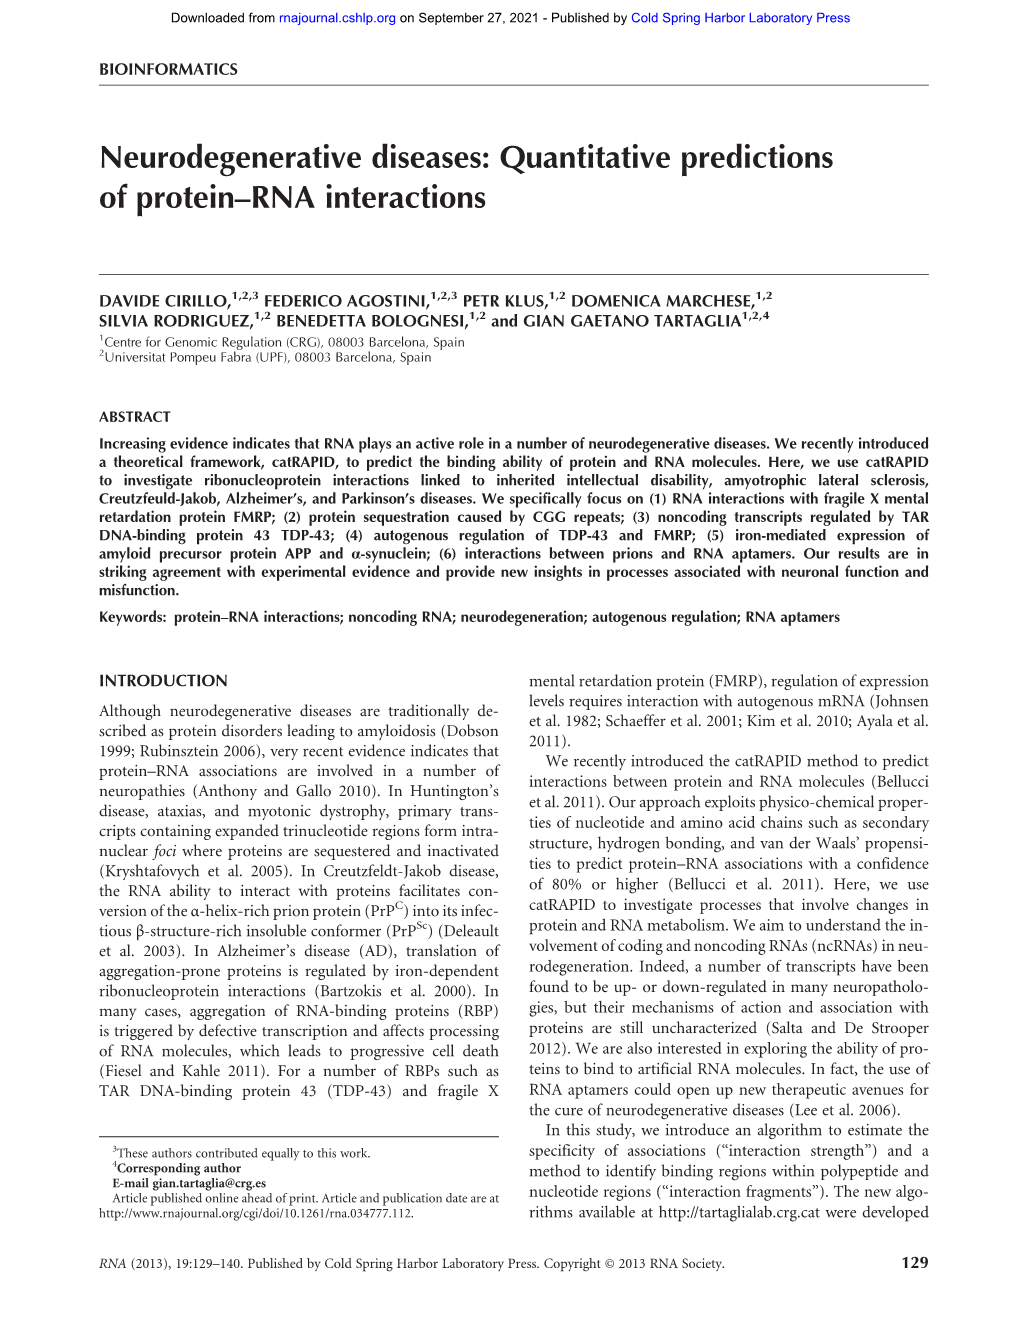 Neurodegenerative Diseases: Quantitative Predictions of Protein–RNA Interactions